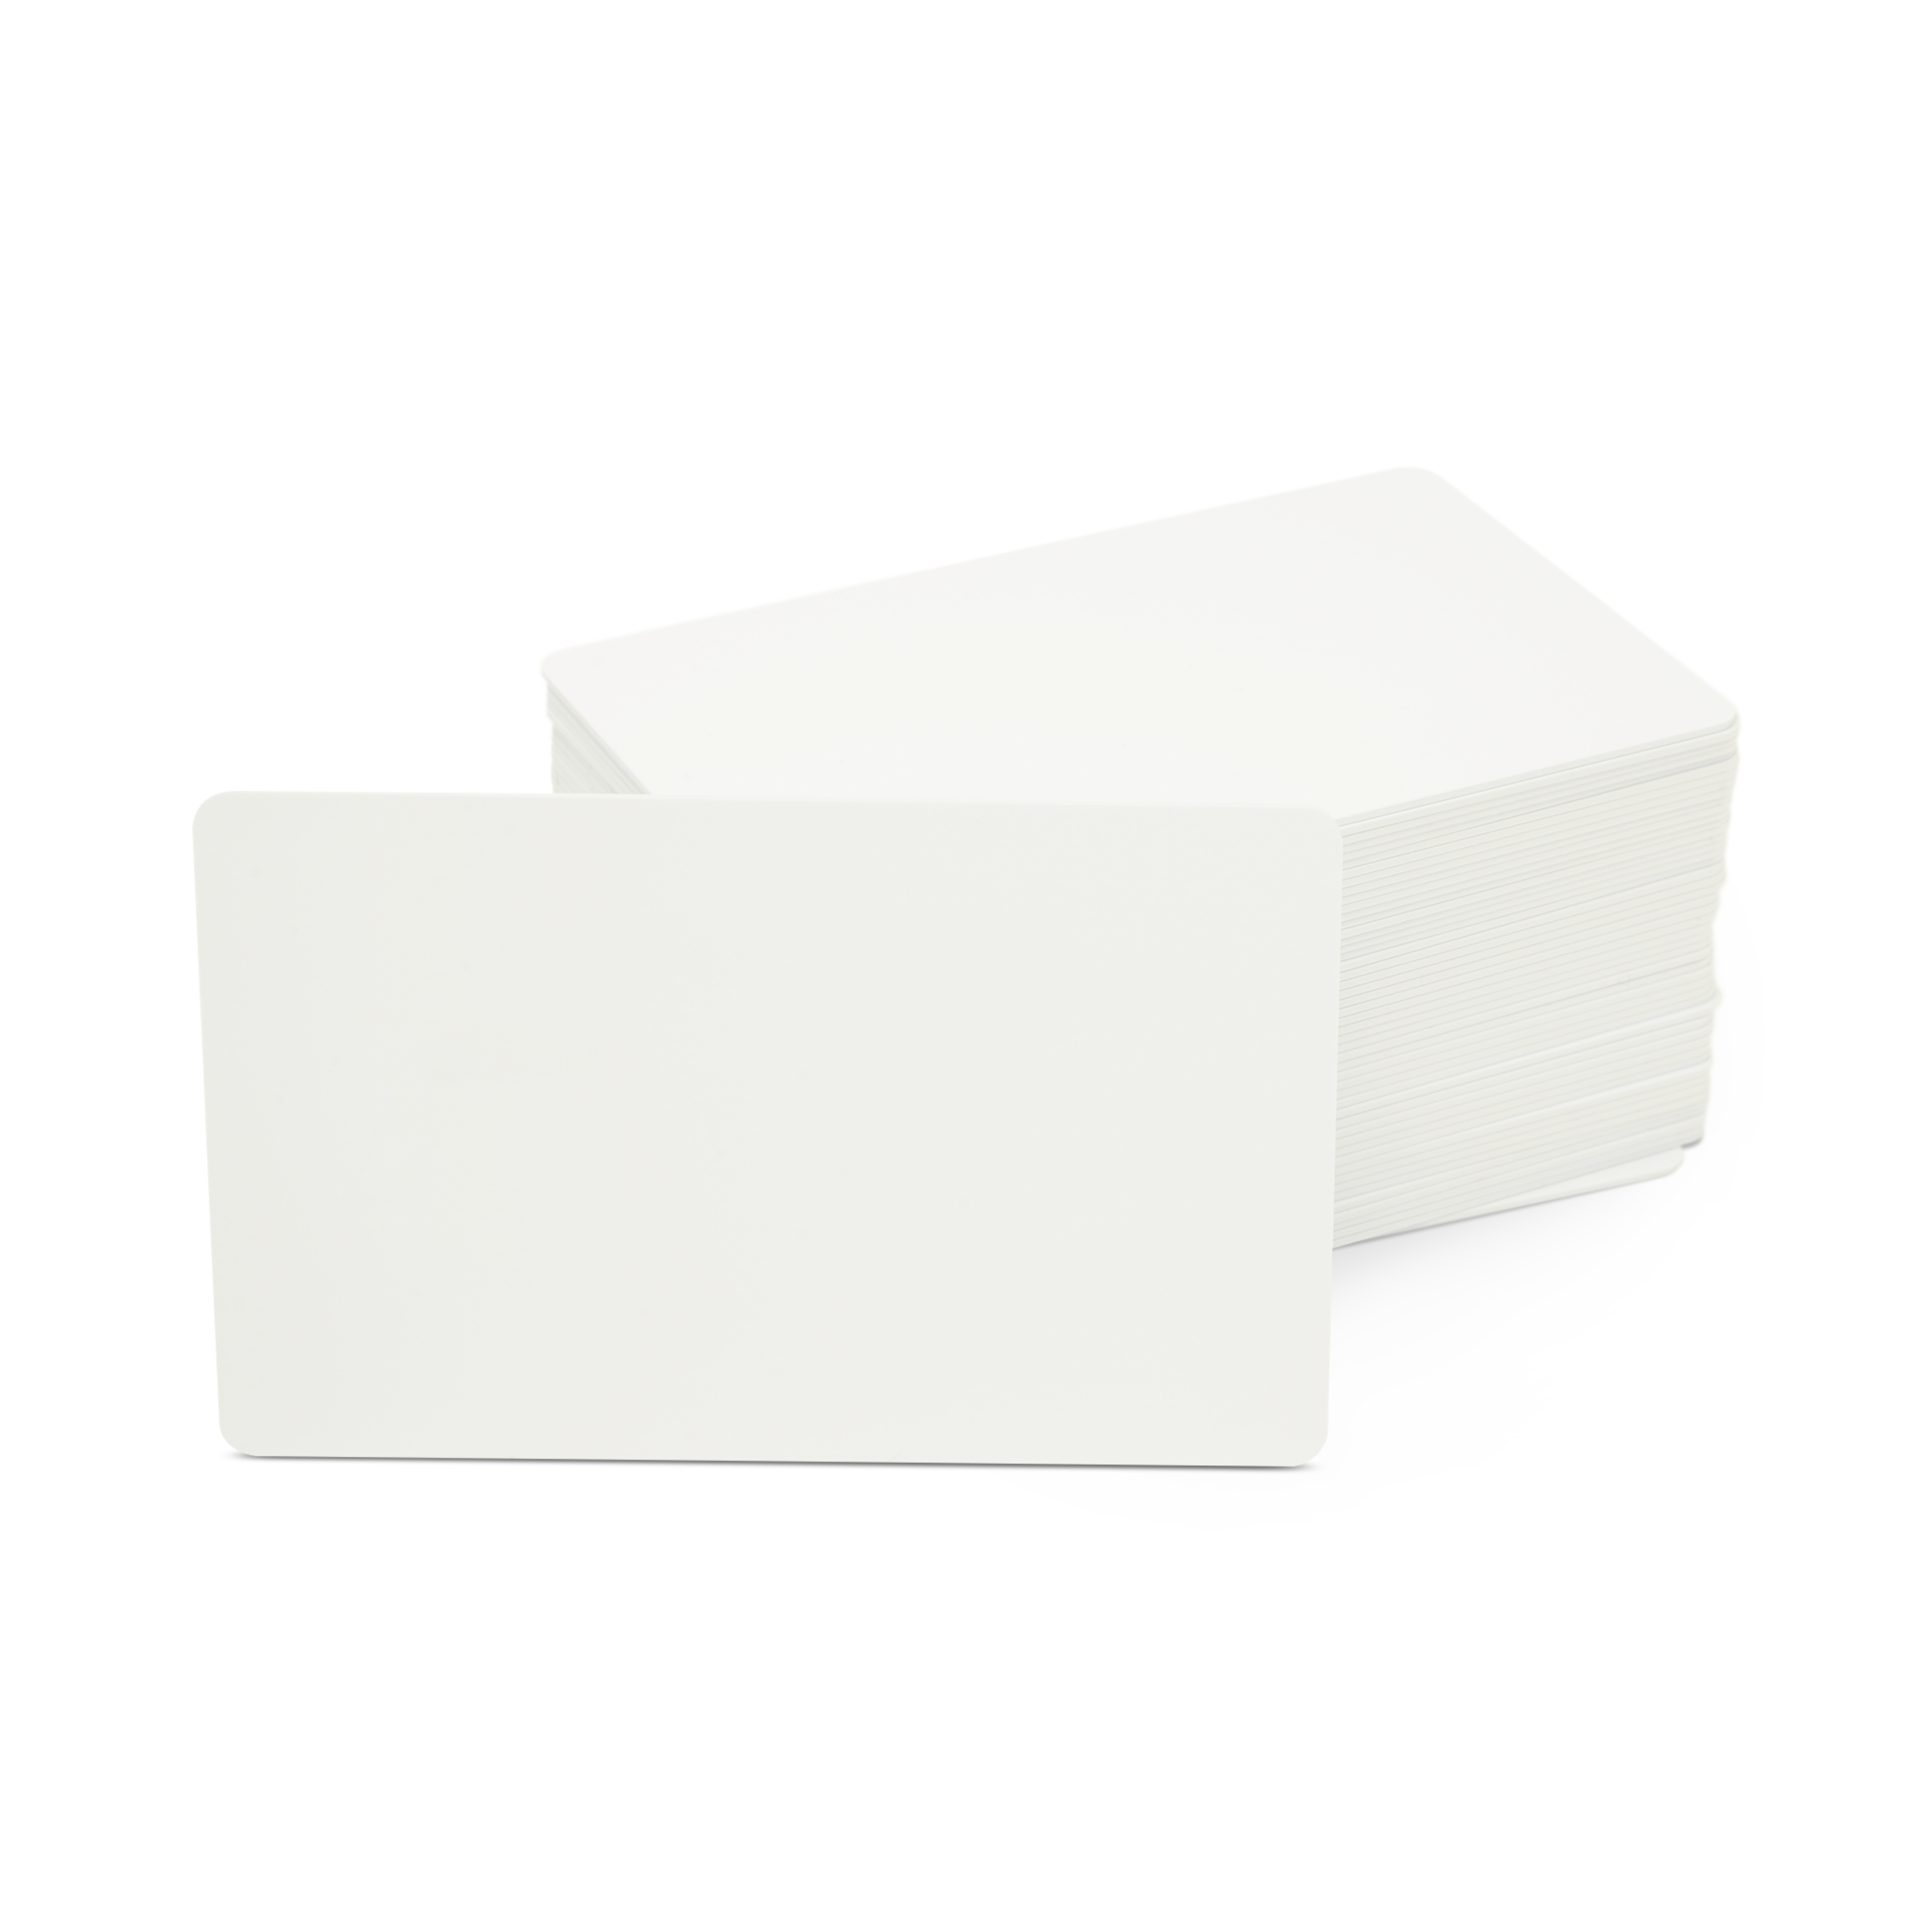 NFC Card PVC - 85,6 x 54 mm - NTAG213 - 180 Byte - white glossy